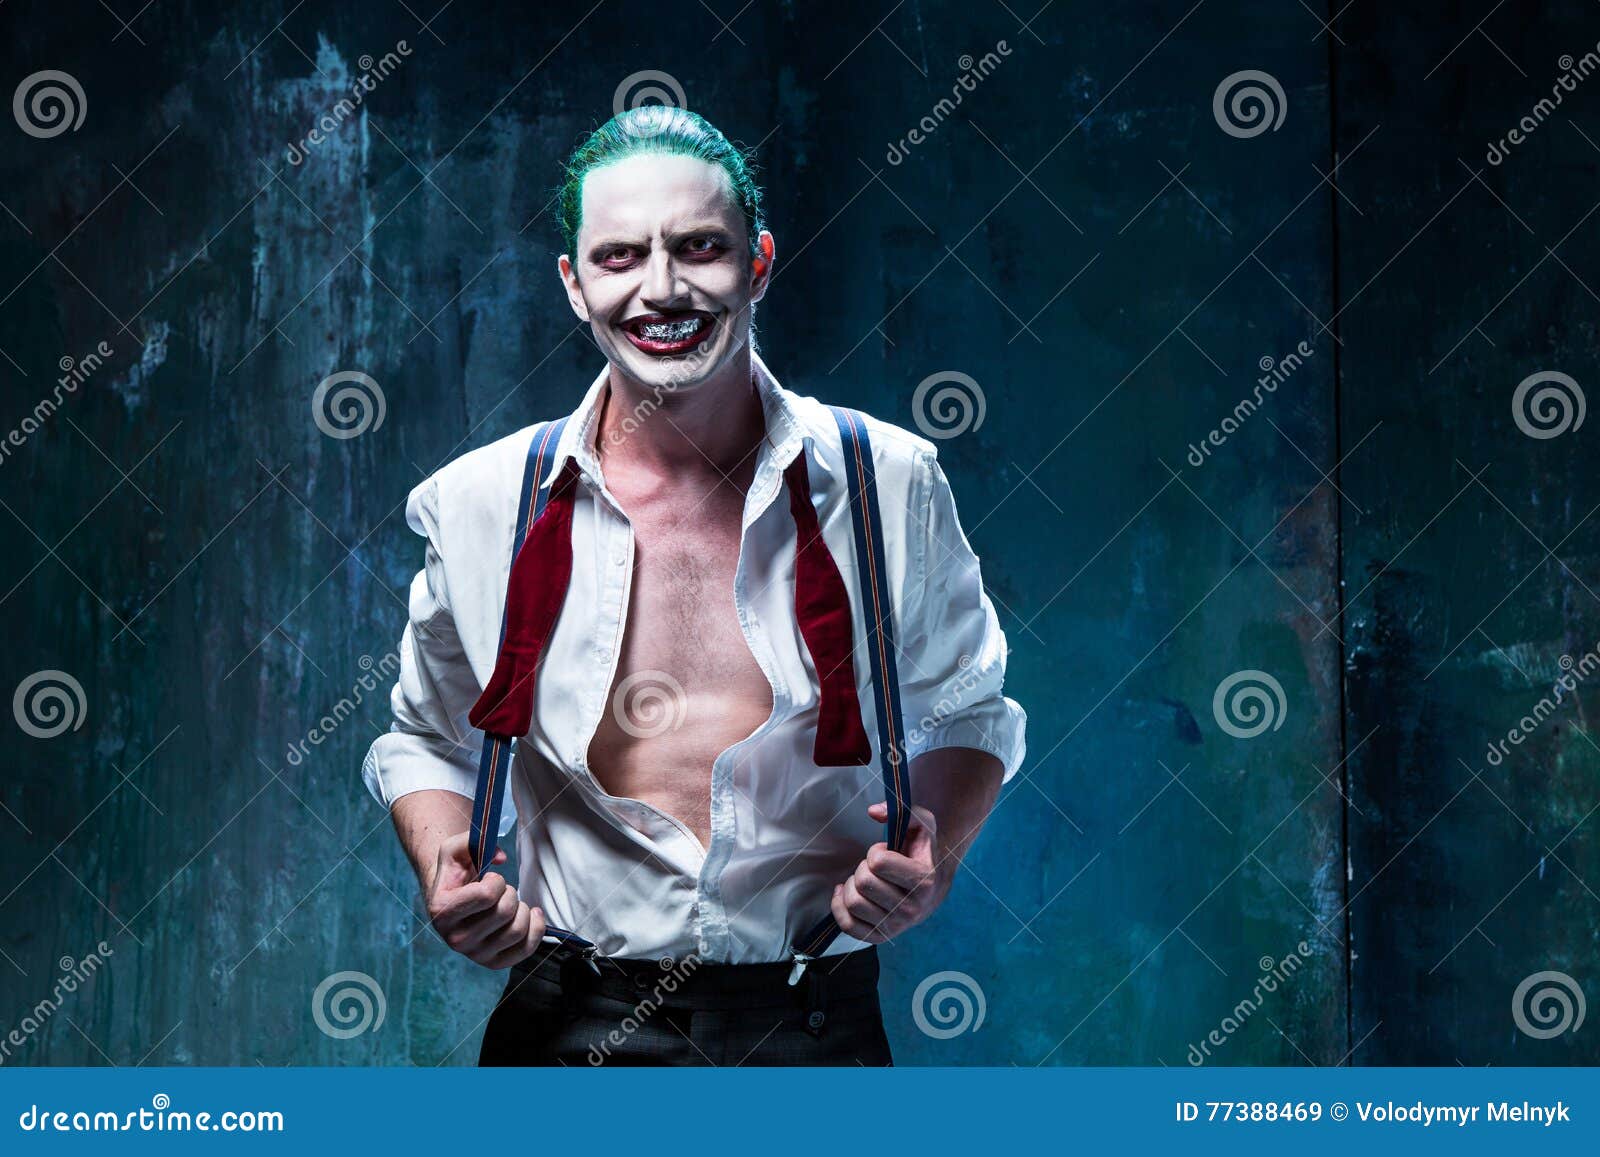 Bloody Halloween Theme: Crazy Joker Face Stock Image - Image of ...